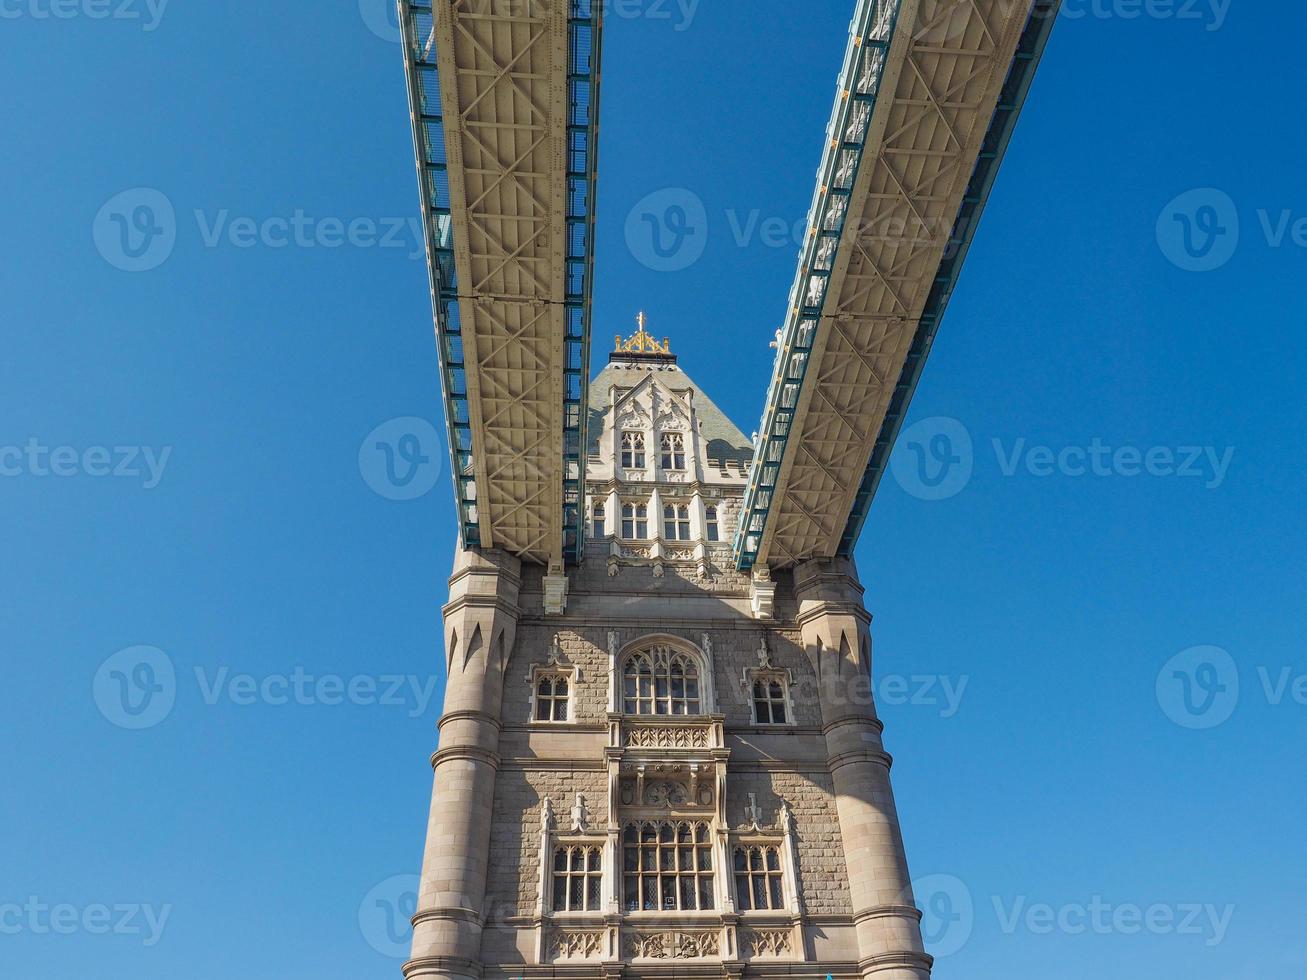 Tower Bridge di Londra foto